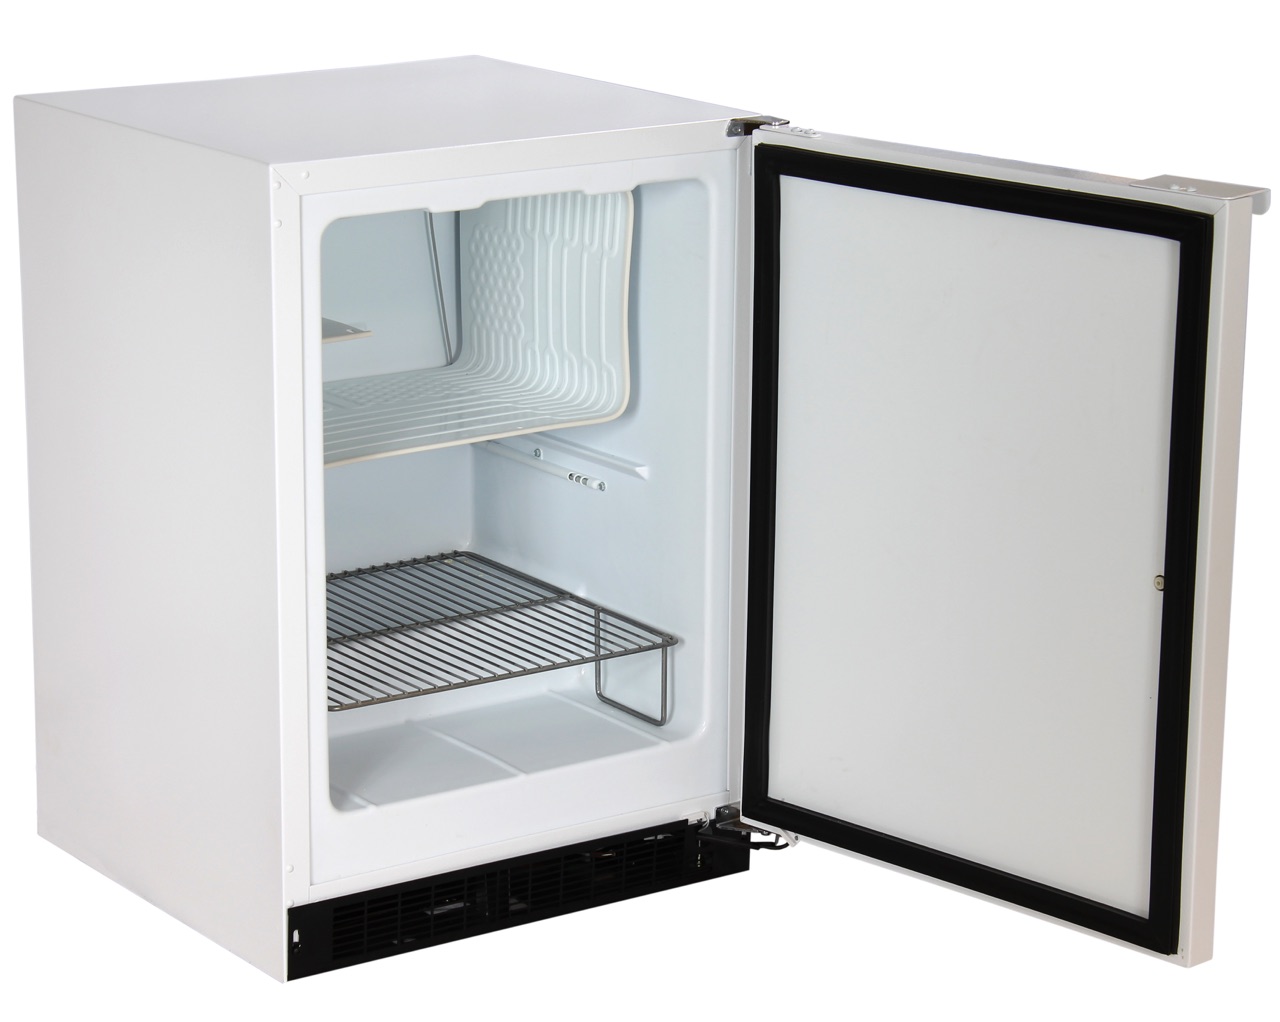 24″ All Freezer | Marvel Scientific Refrigerator Freezer and Parts